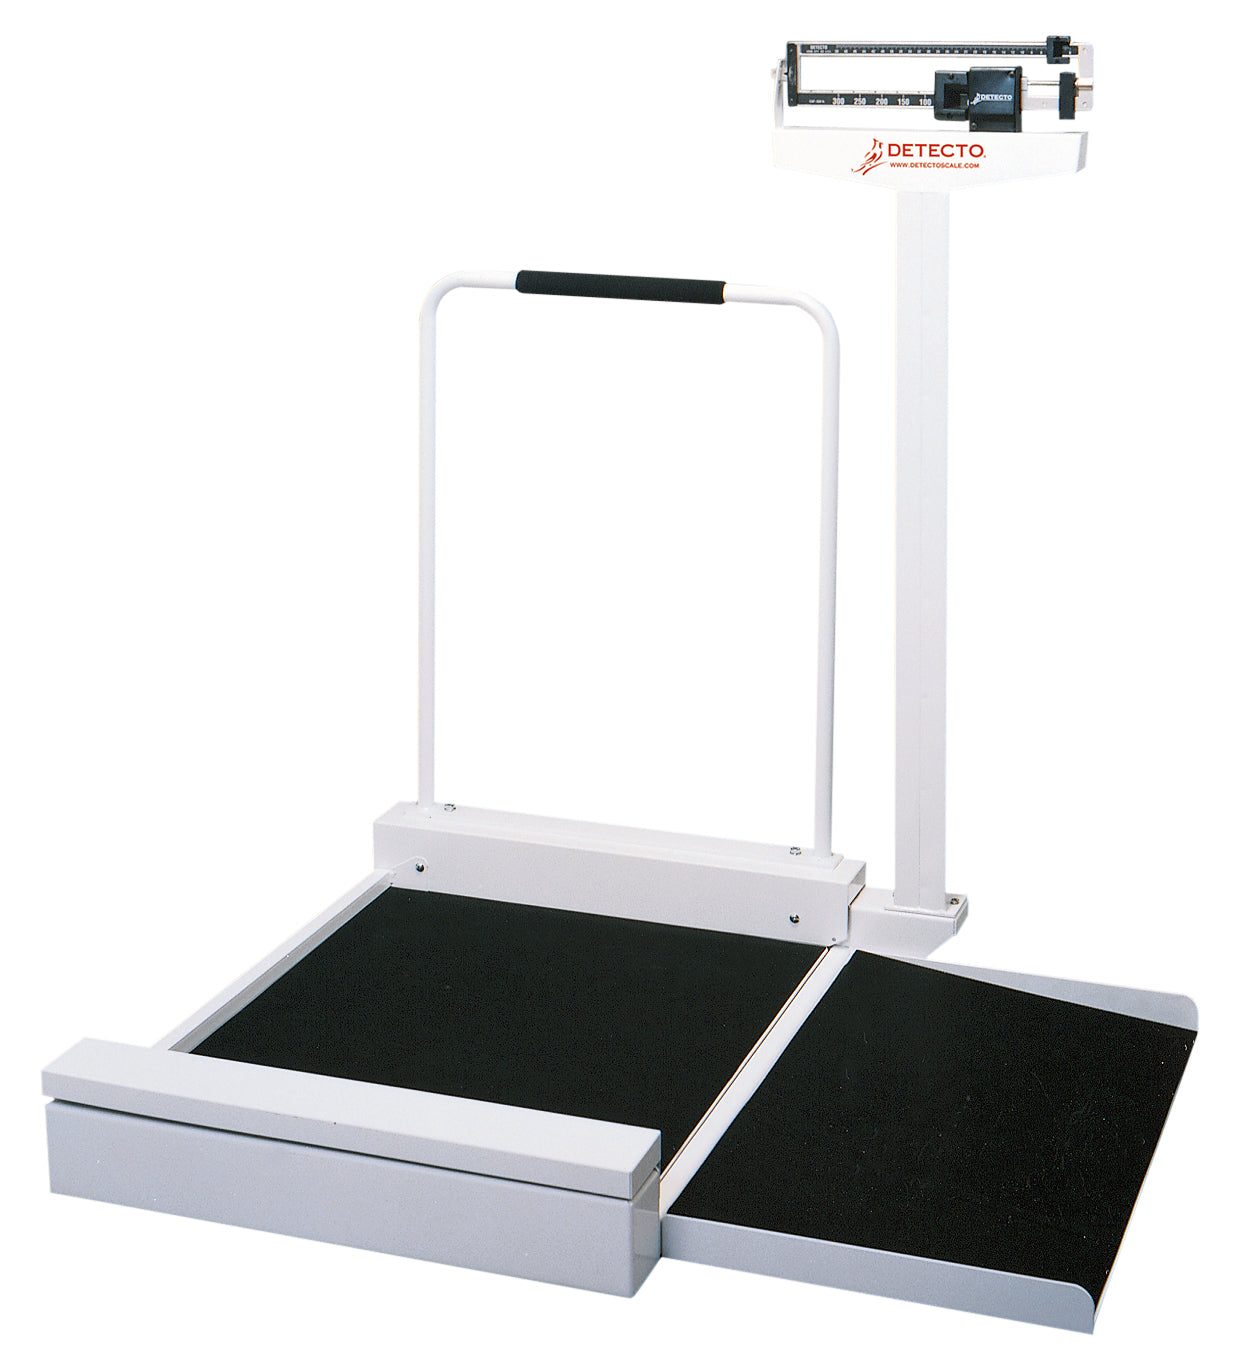 Detecto 495 Wheelchair Scale, Stationary, Weighbeam, 450 lb x 4 oz